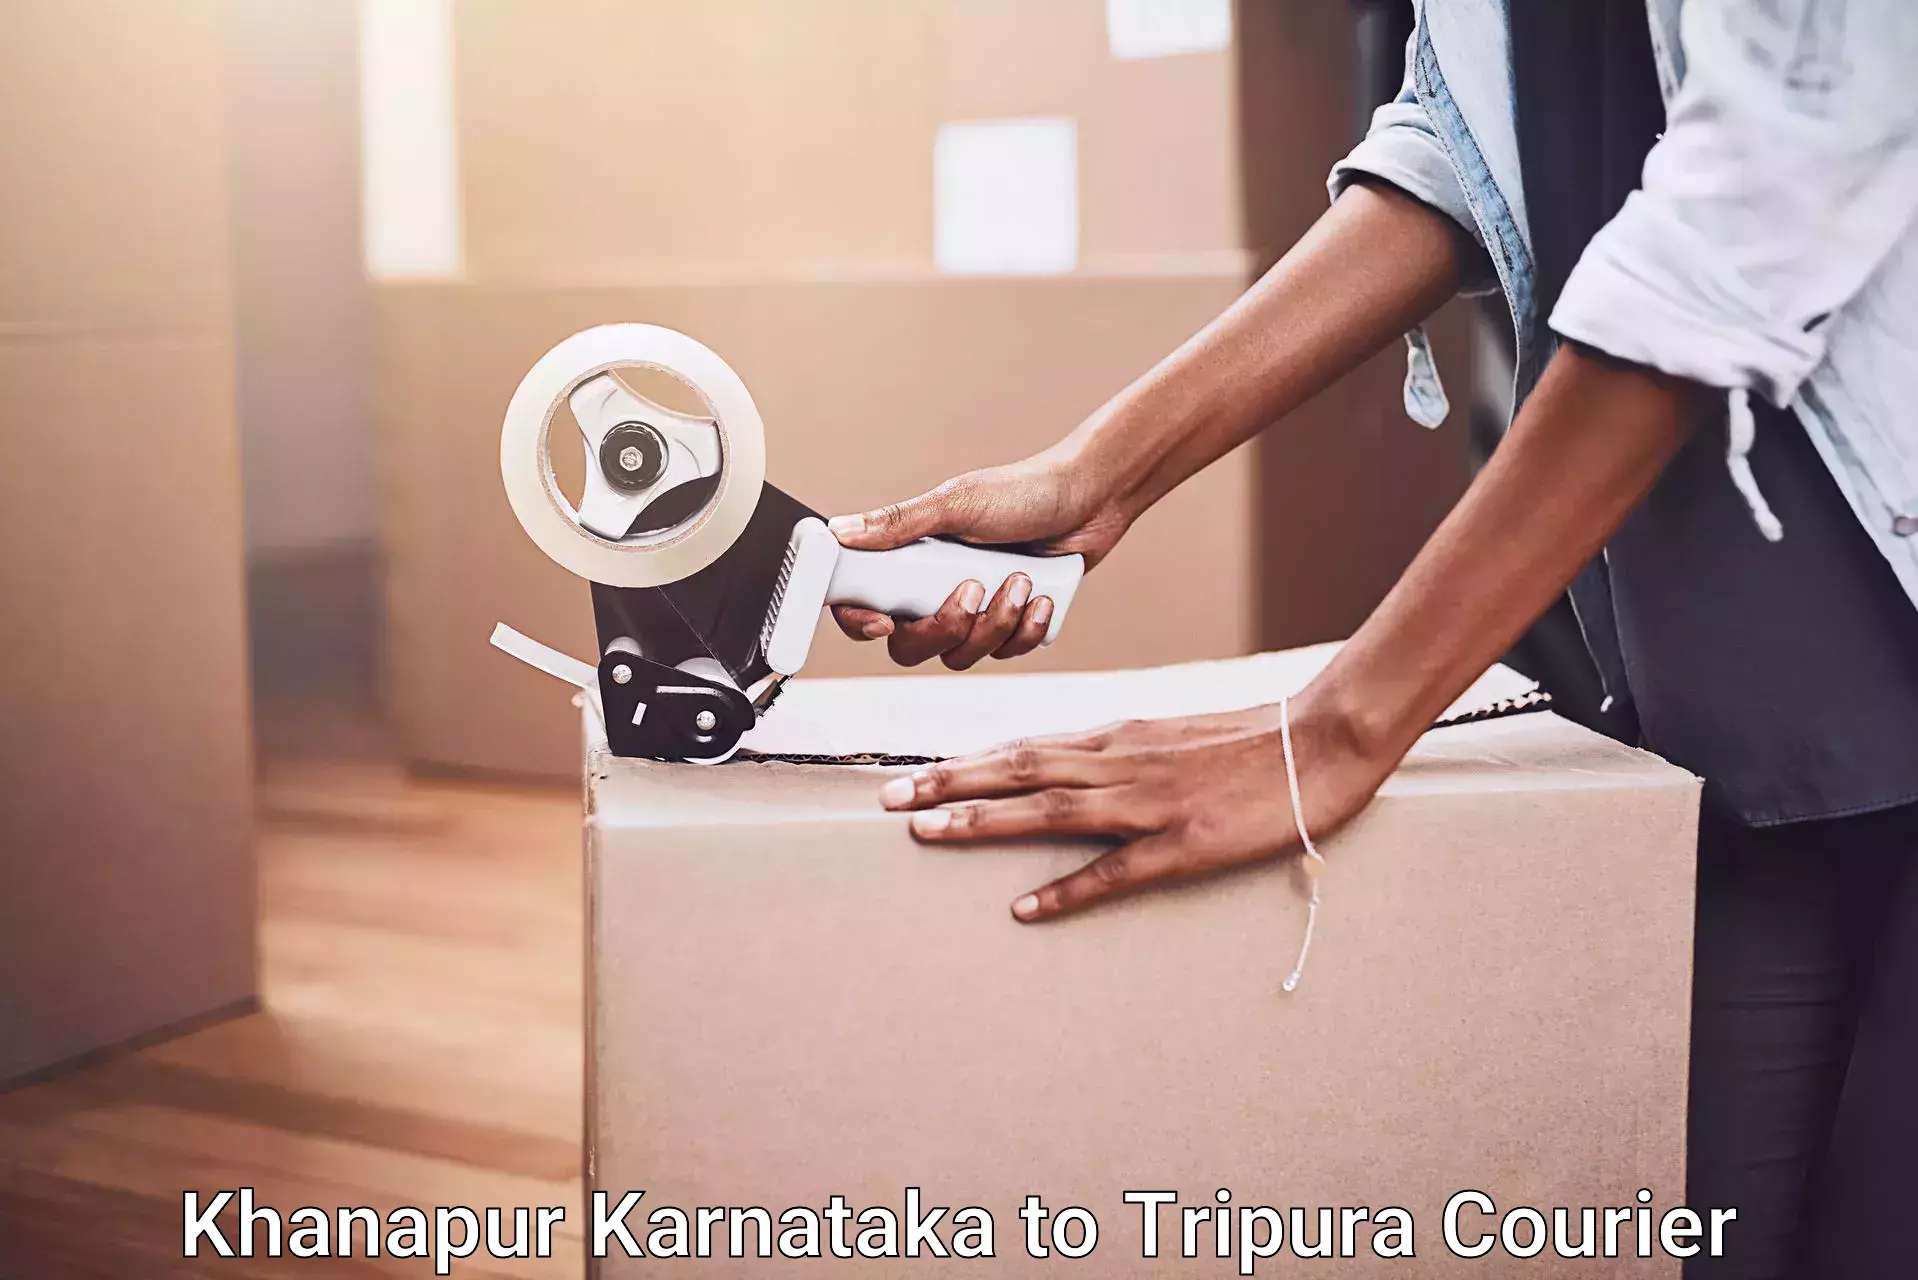 Furniture moving experts Khanapur Karnataka to Tripura